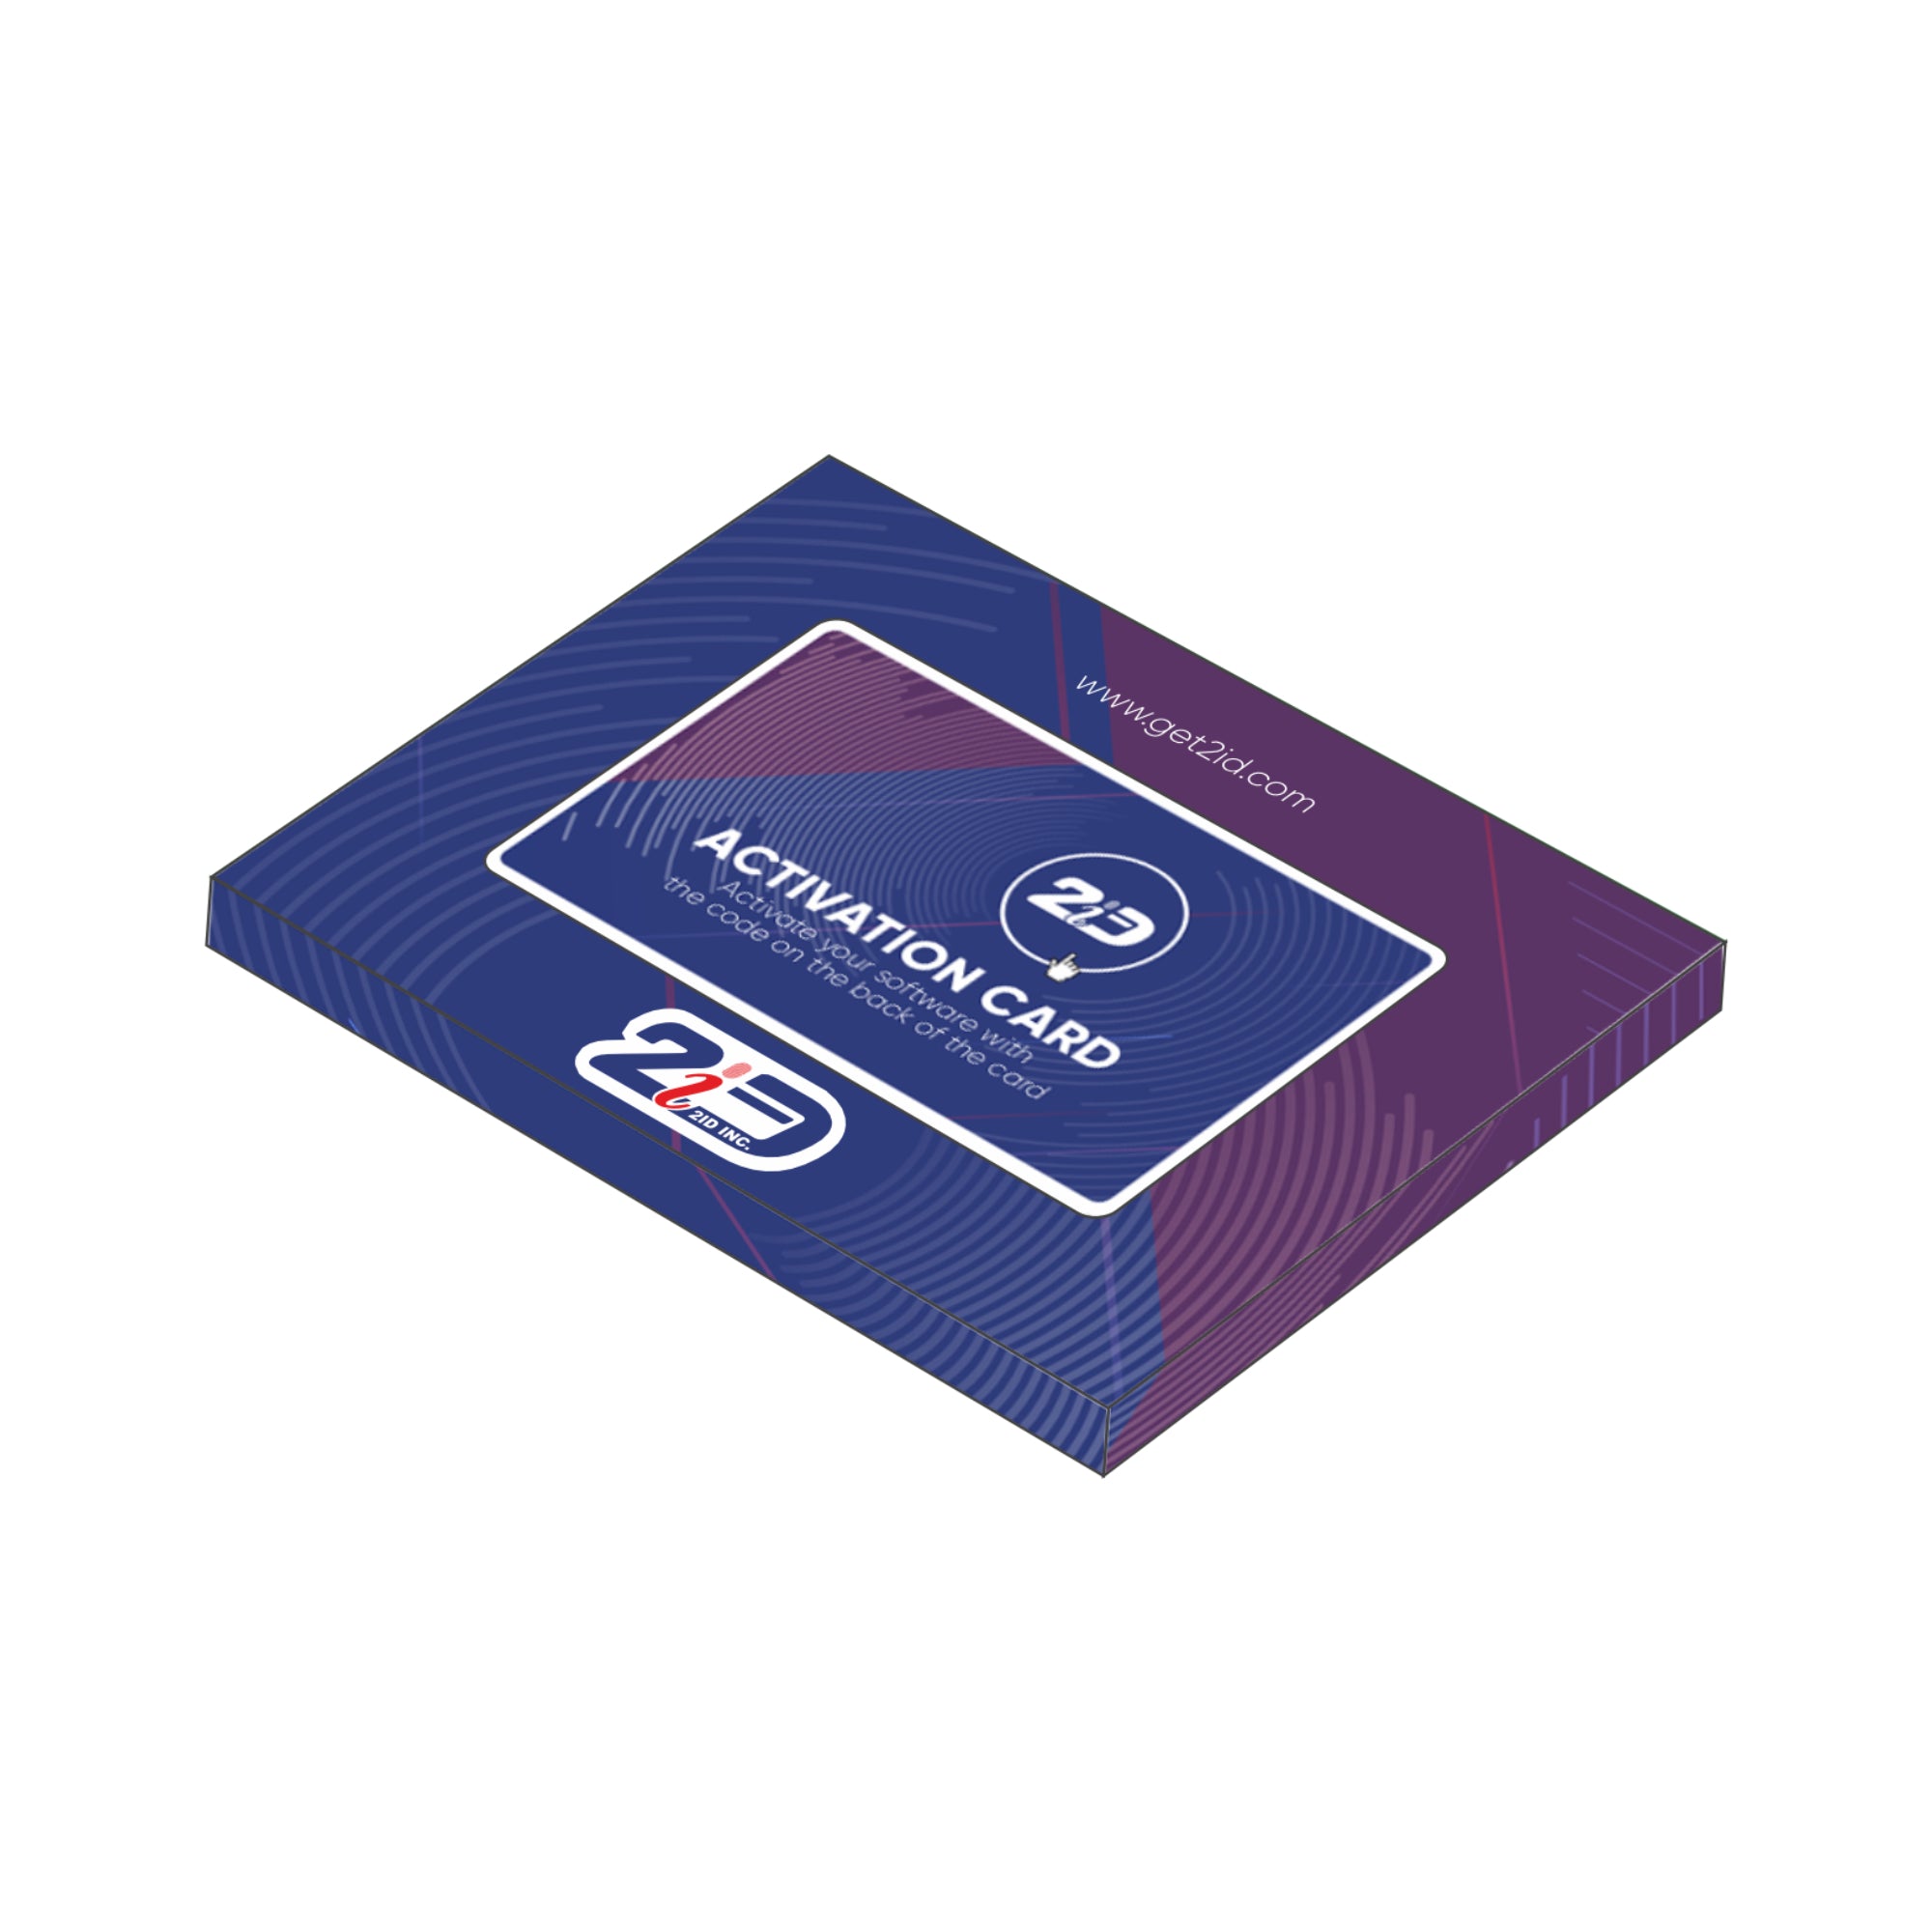 2ID Card Software - Enterprise Edition (Upgrade Code)